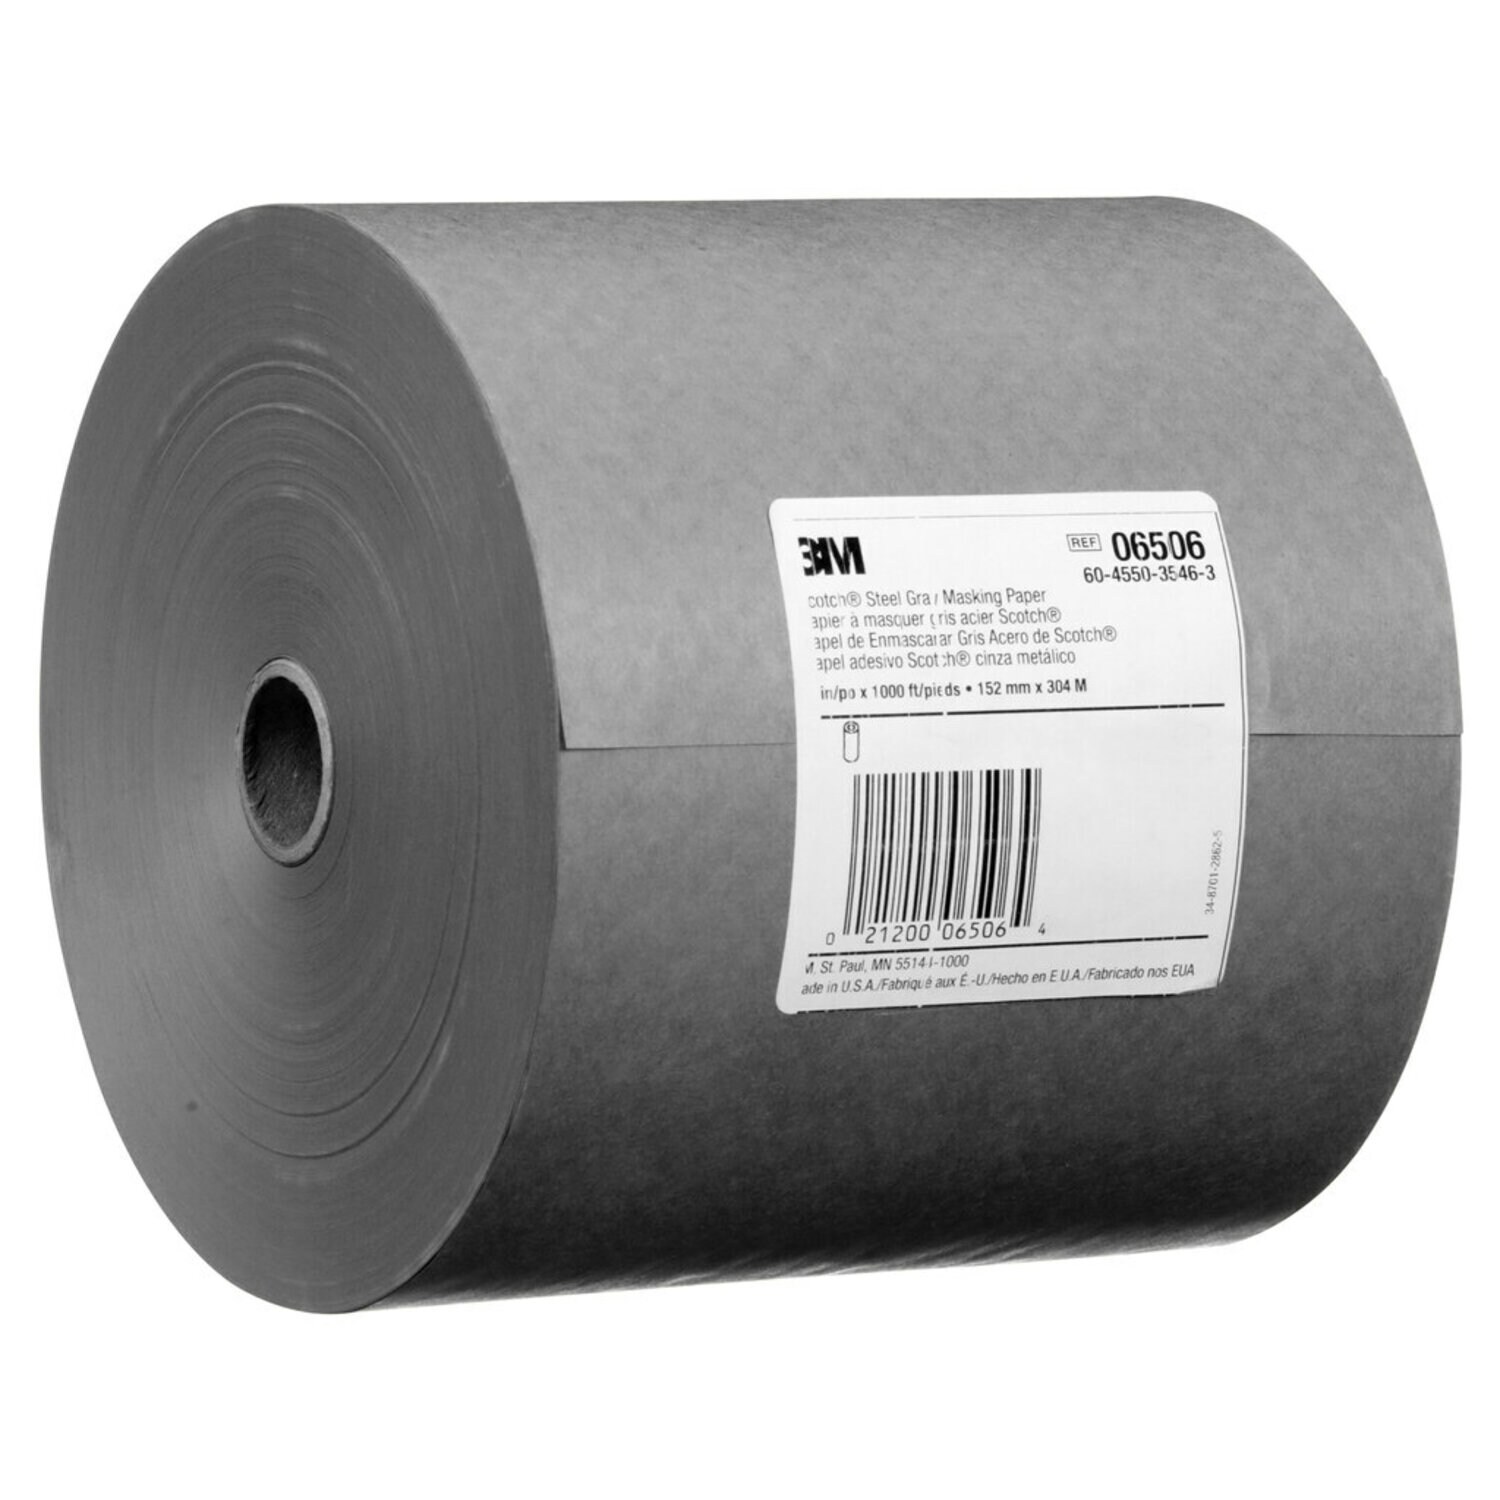 7000045440 - Scotch Steel Gray Masking Paper, 06506, 6 in x 1000 ft, 6 per case